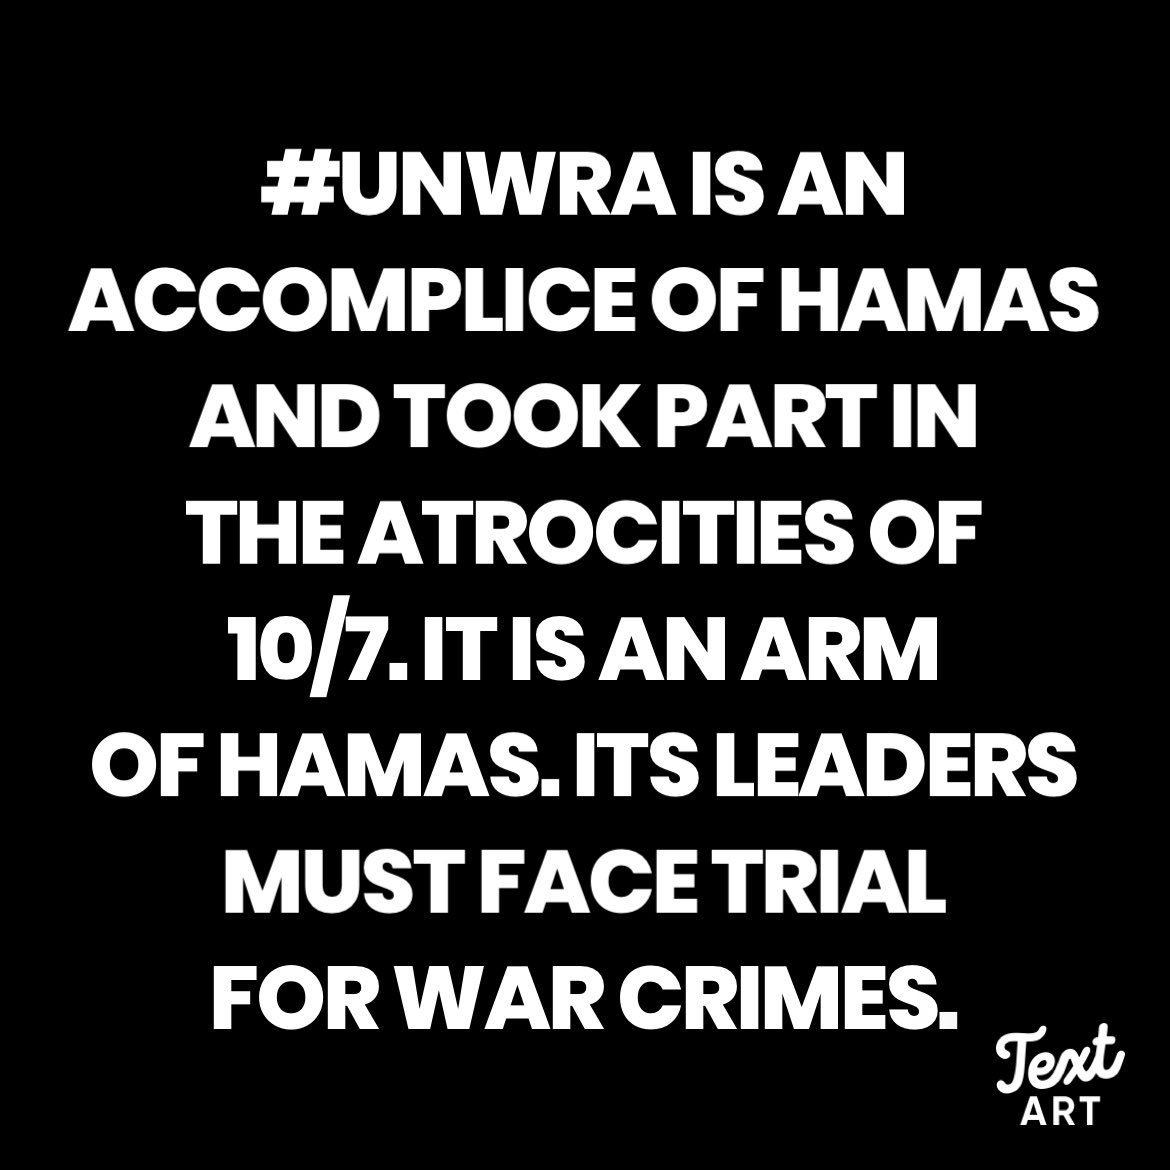 @UNRWA @UN_News_Centre @UN @UNOCHA @ochaopt #UNWRA LIES.